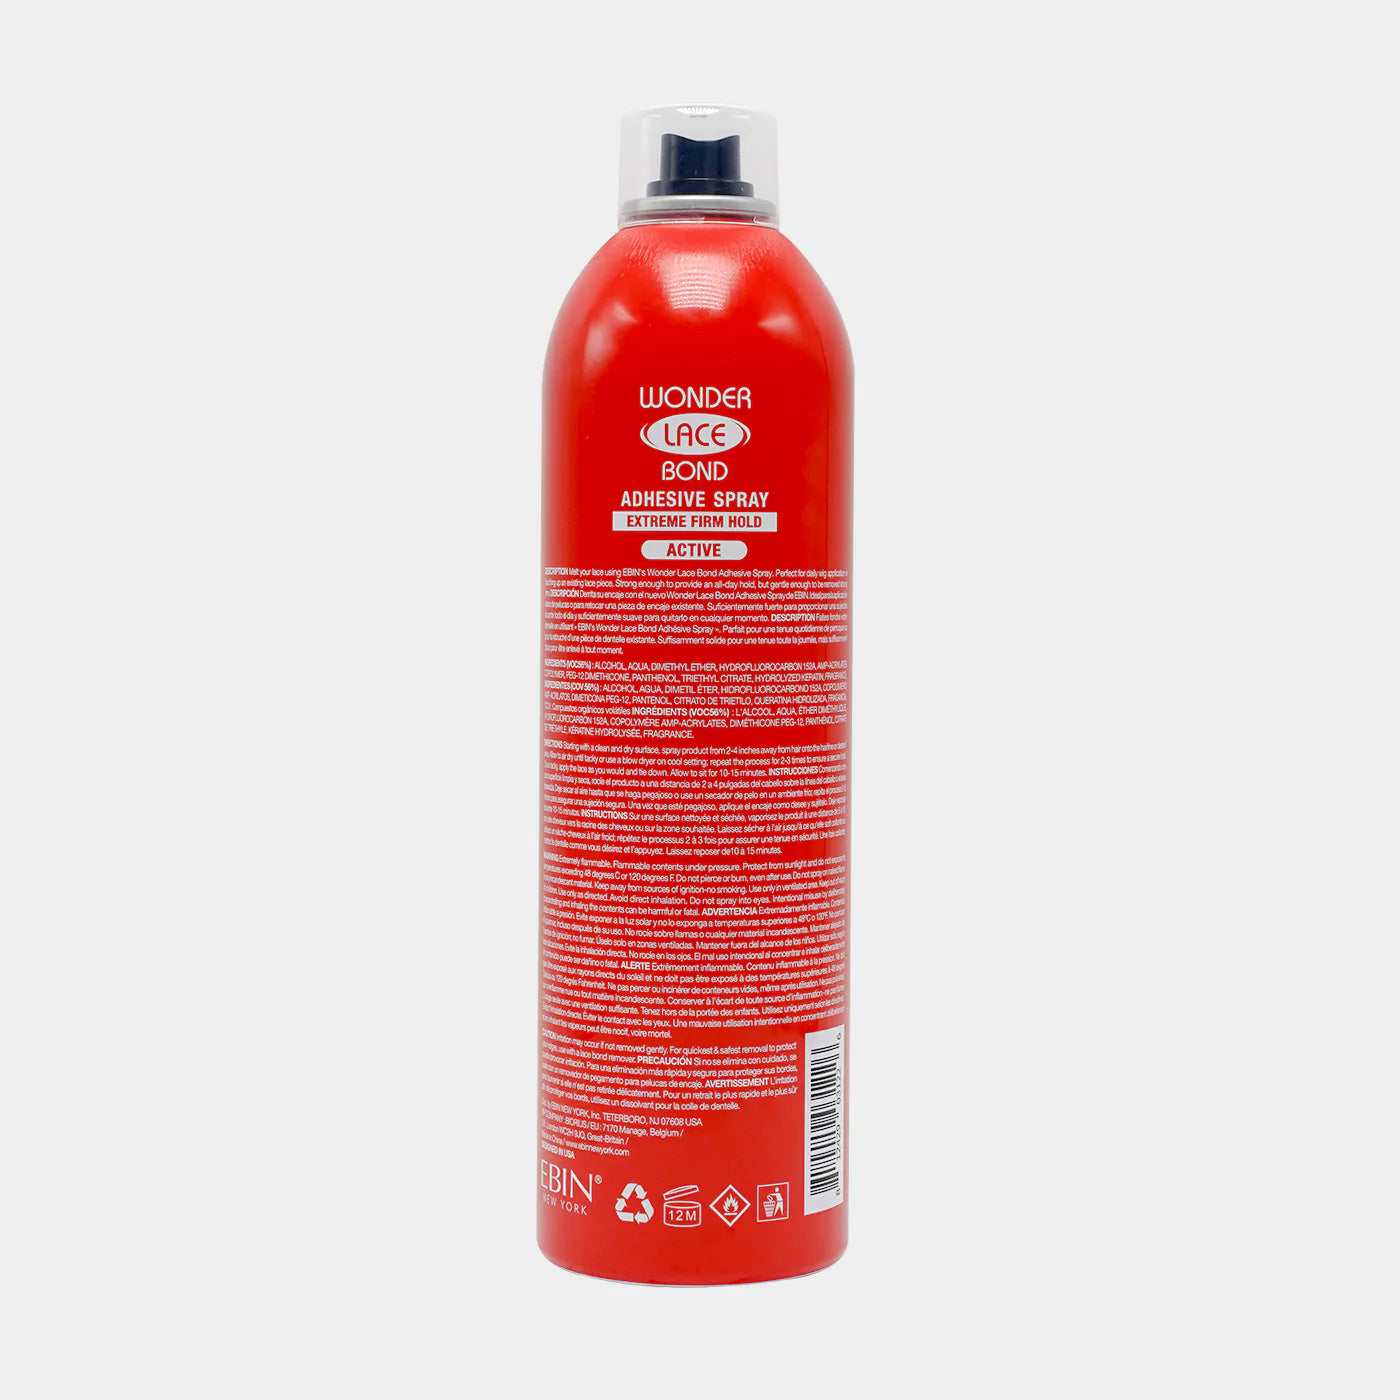 Wonder Lace Bond Wig Adhesive Spray - Extreme Firm Hold (14.2OZ - 420ML)